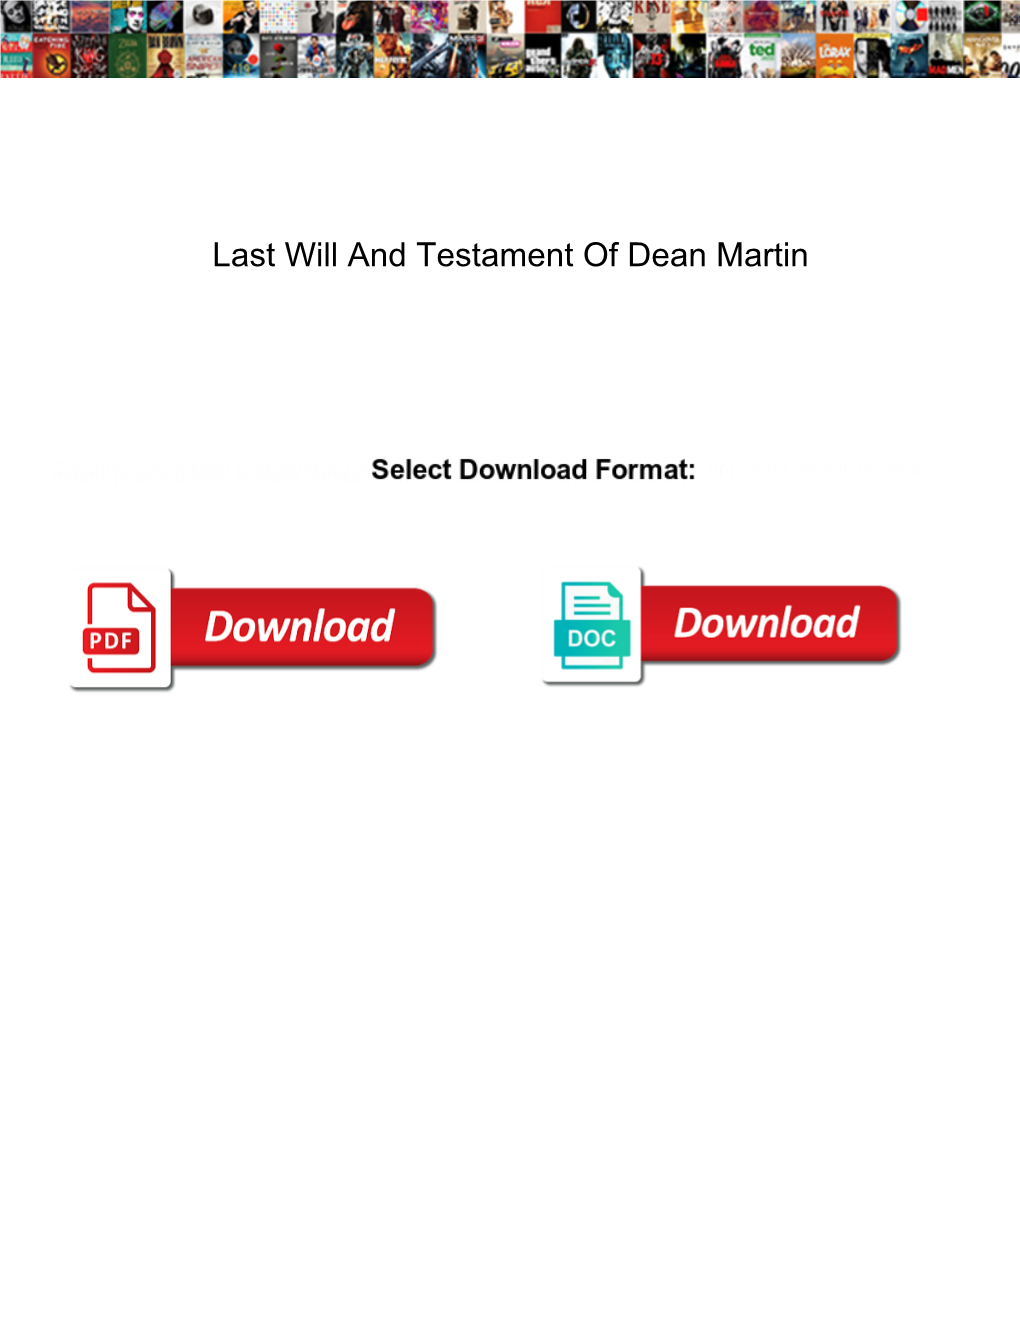 Last Will and Testament of Dean Martin Crawler